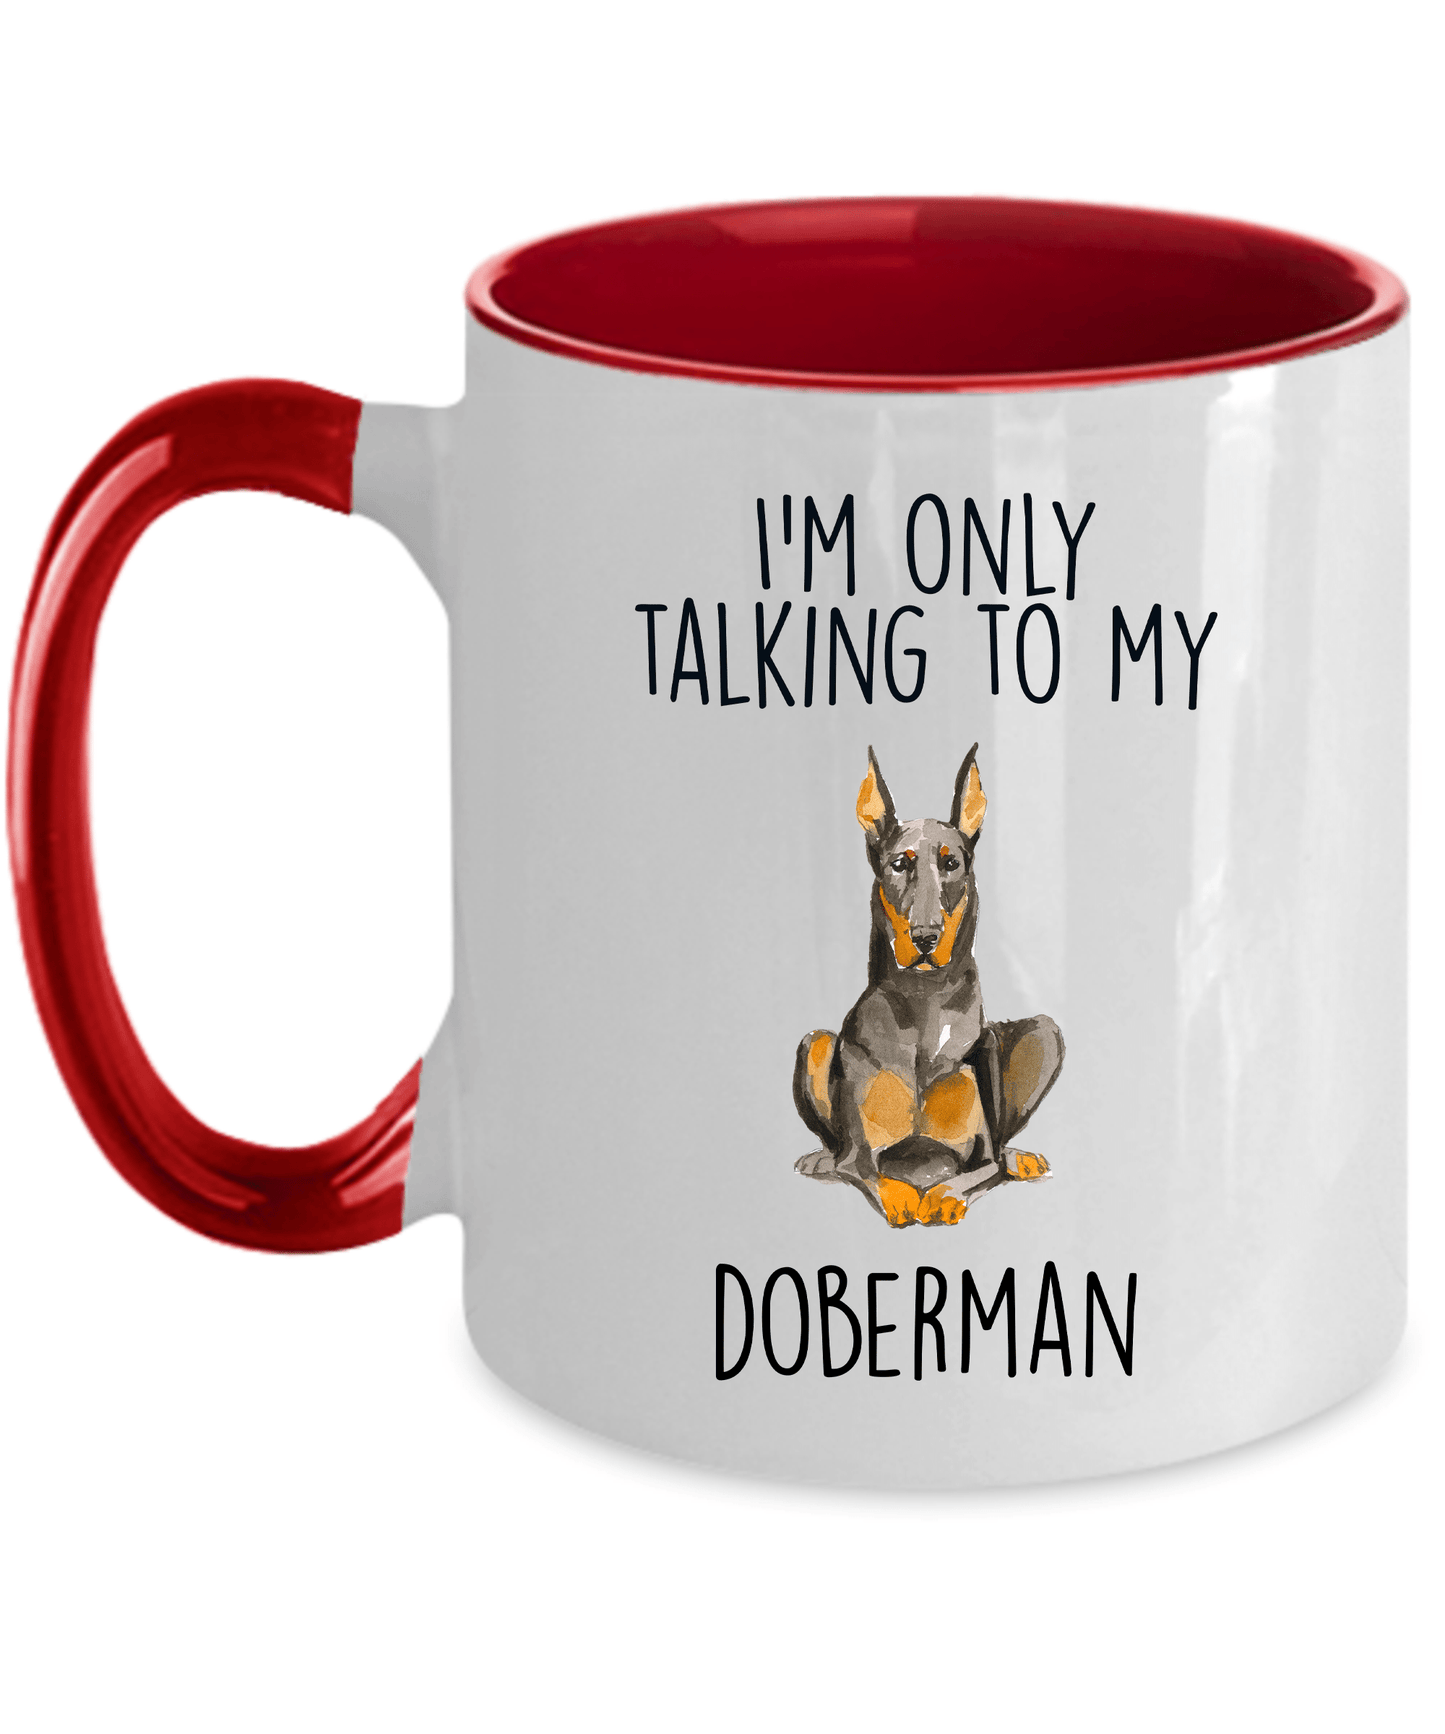 Doberman Pinscher Ceramic Coffee Mug I'm Only Talking to my Dog